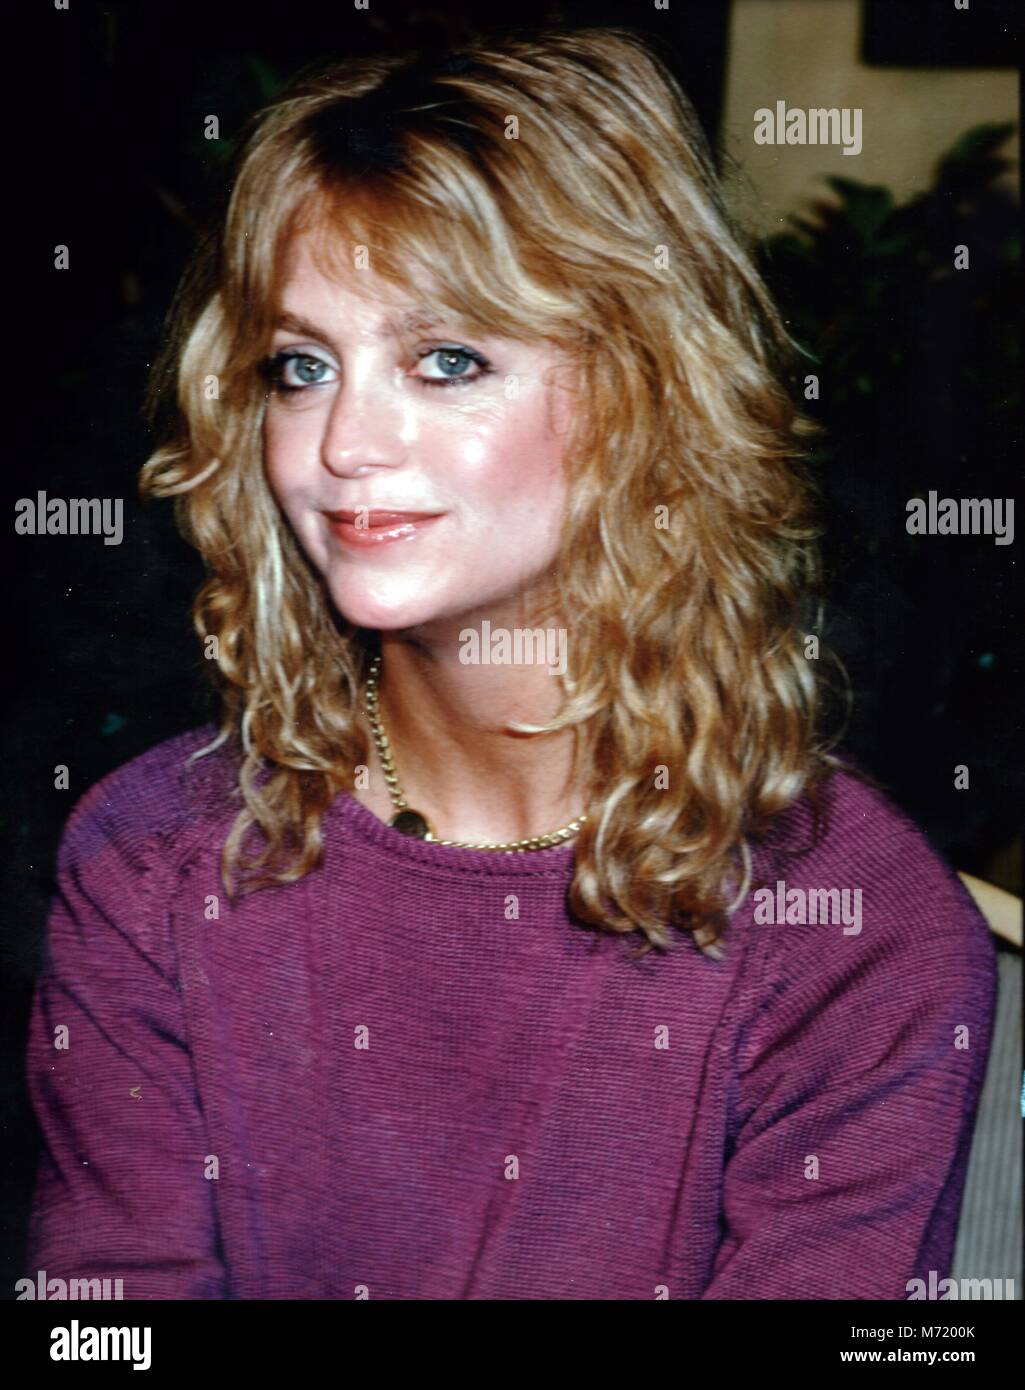 Goldie hawn of photos Goldie Hawn